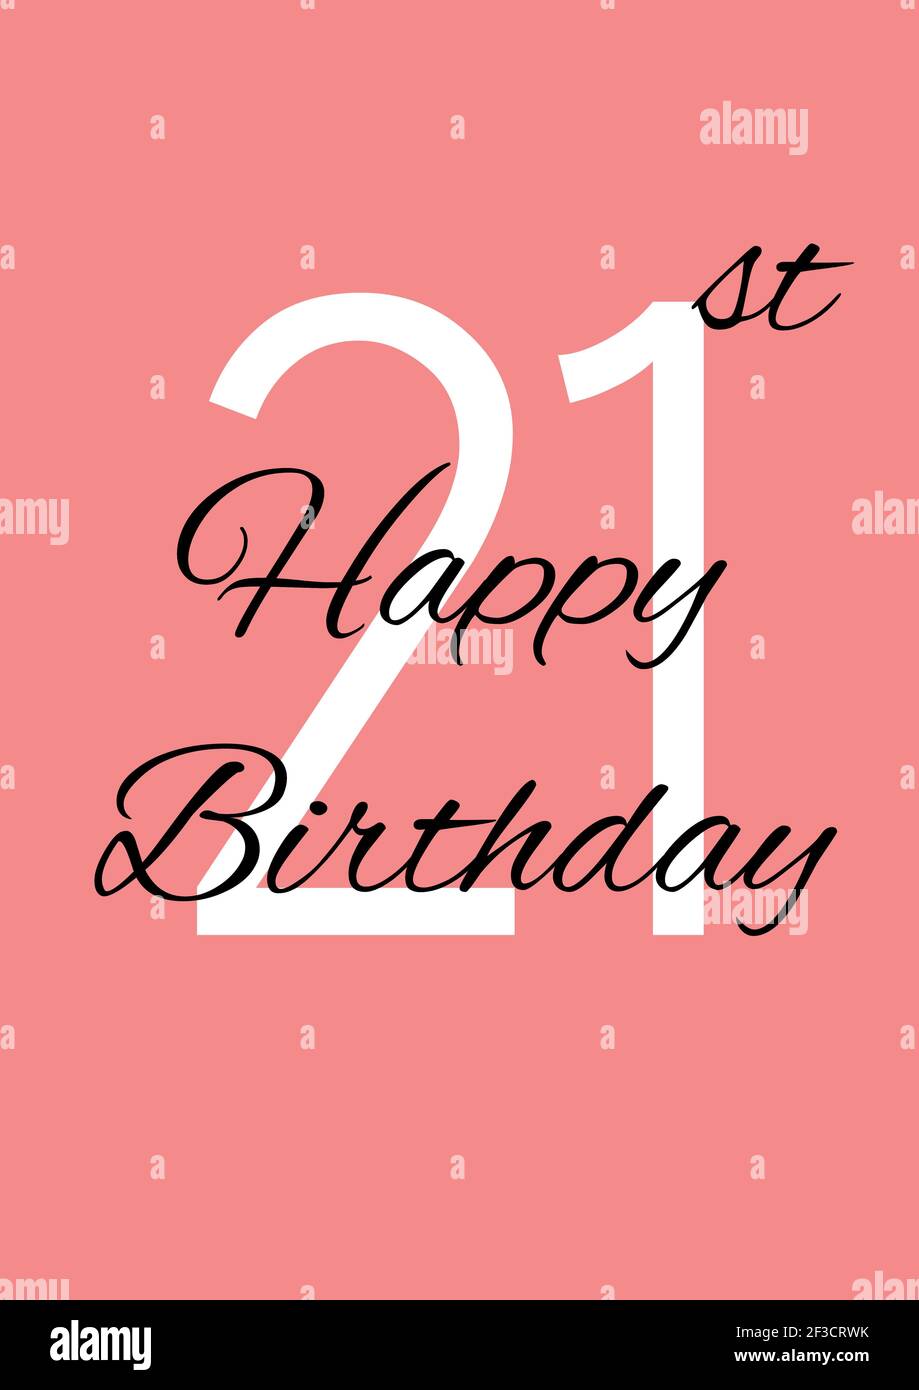 Digitally generated image of happy 21st birthday text against orange background Stock Photo